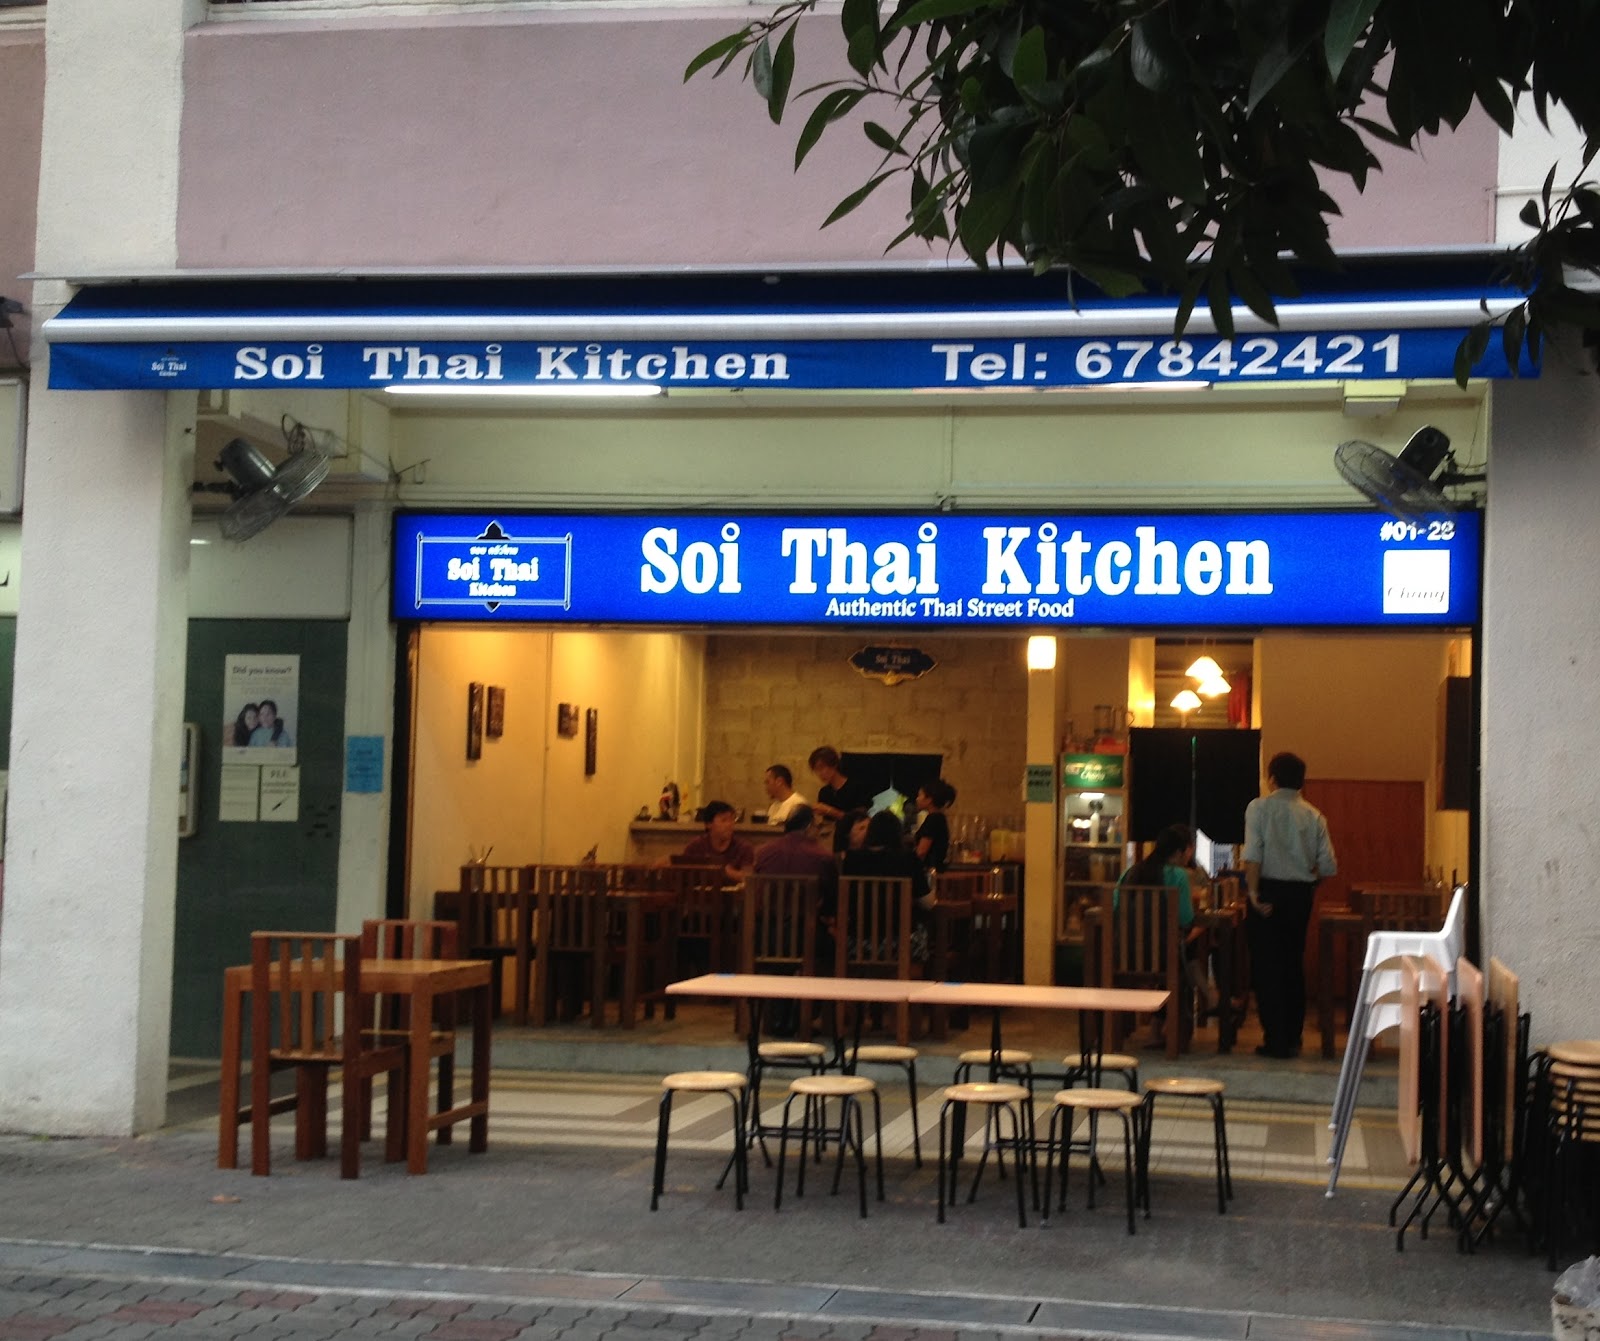 Susans Blog Thai Food Soi Thai Kitchen Tampines